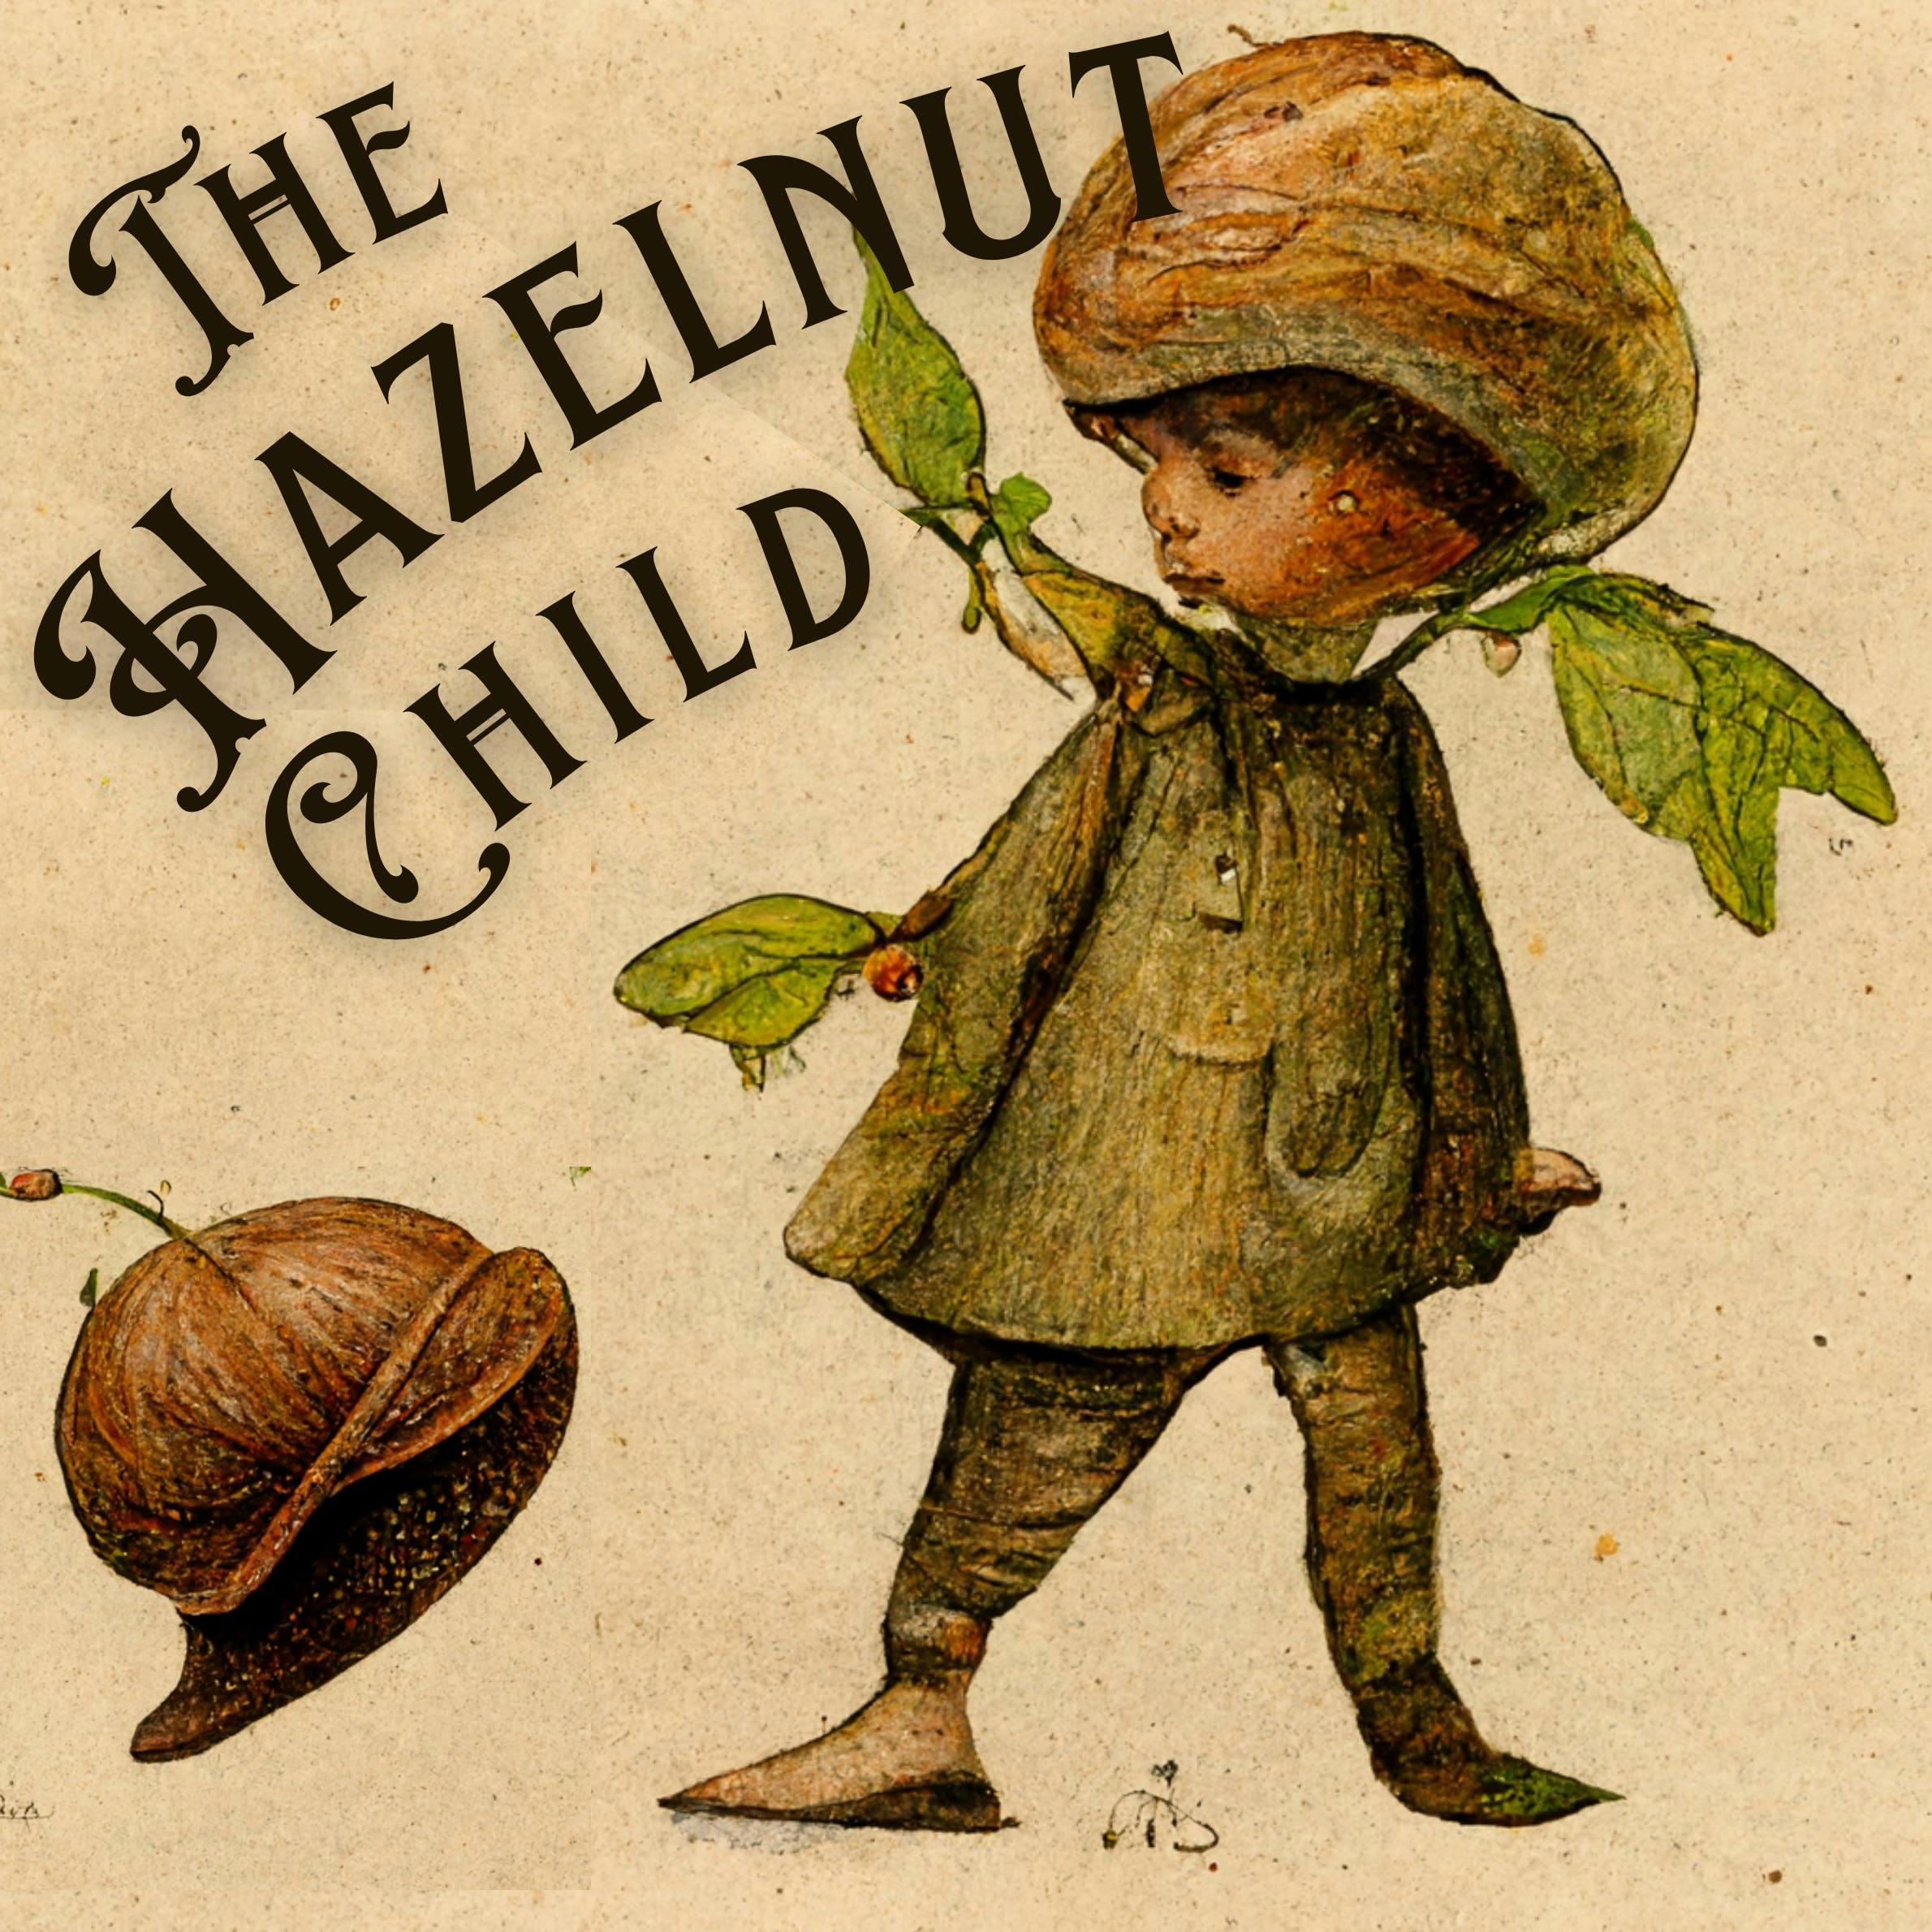 The Hazelnut Child - A Ukrainian Fairytale